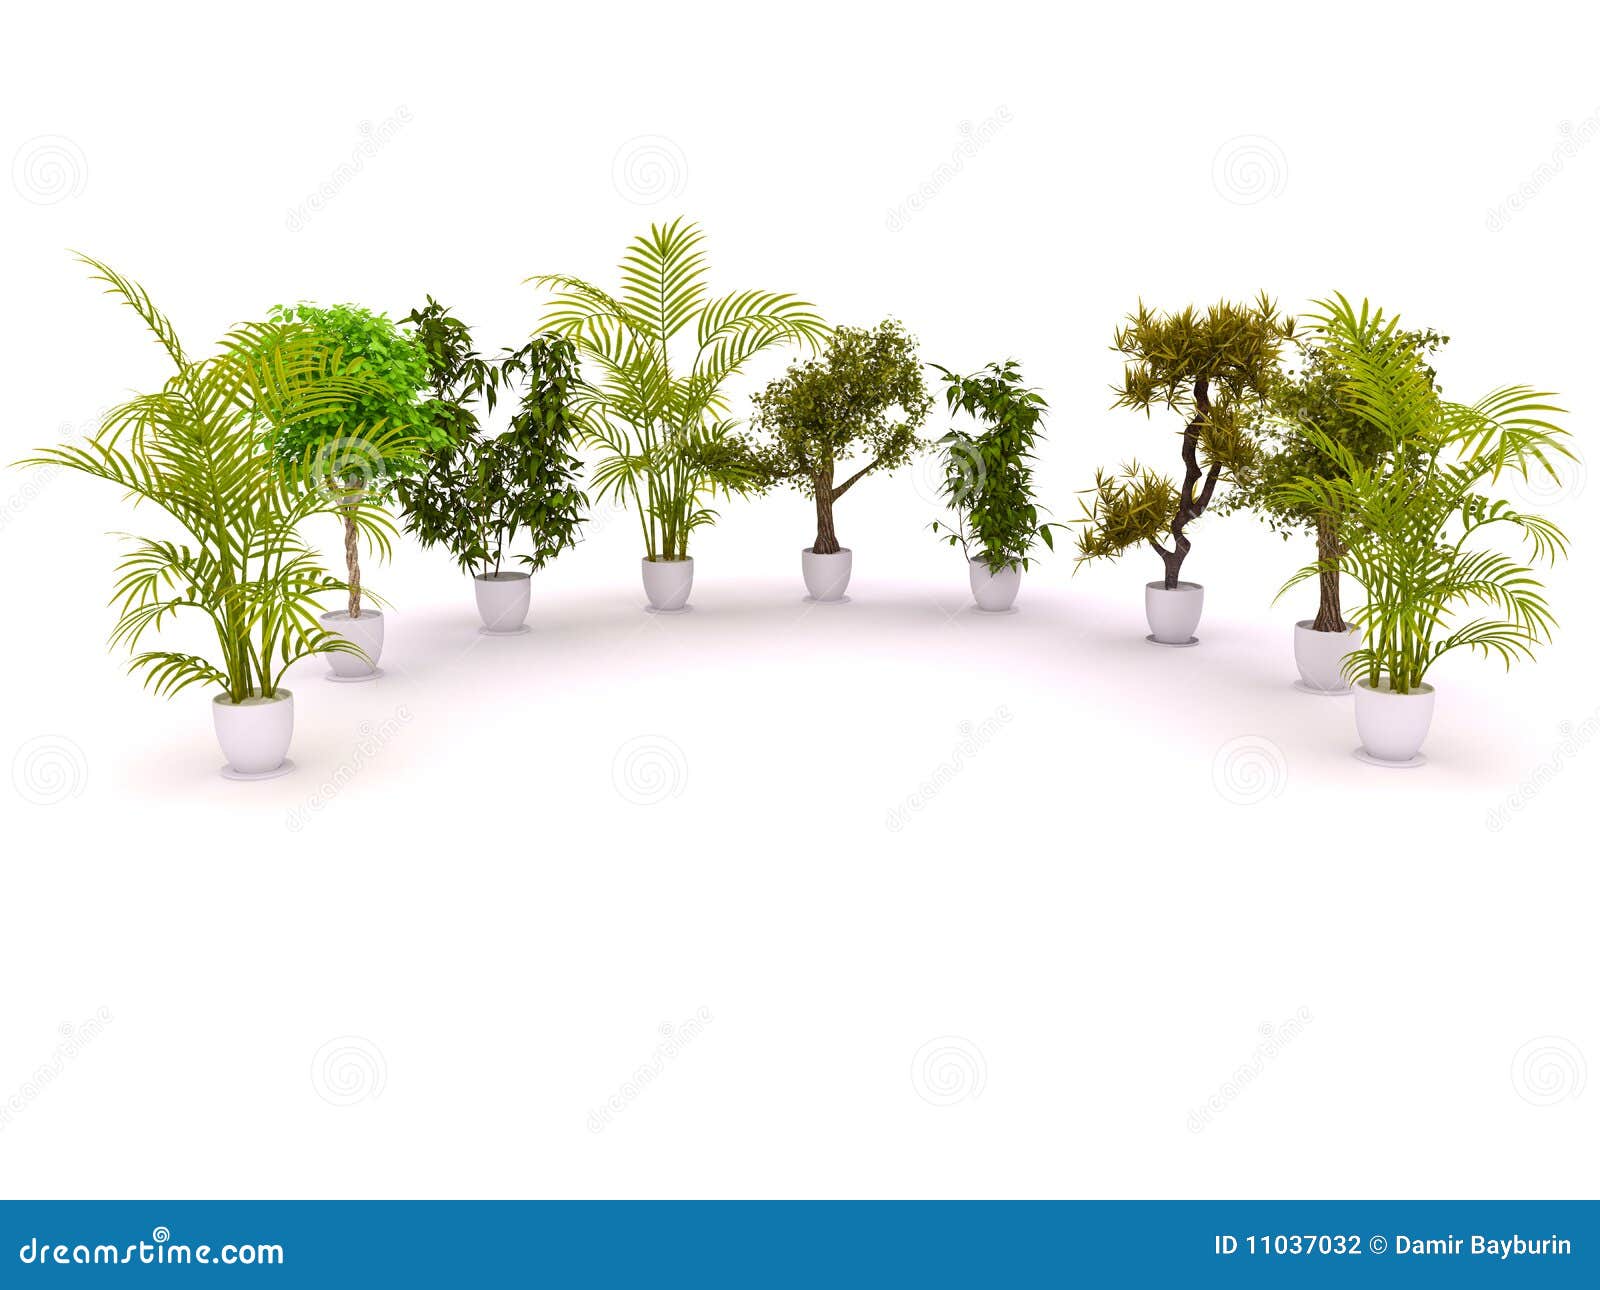 plants standing semicircle